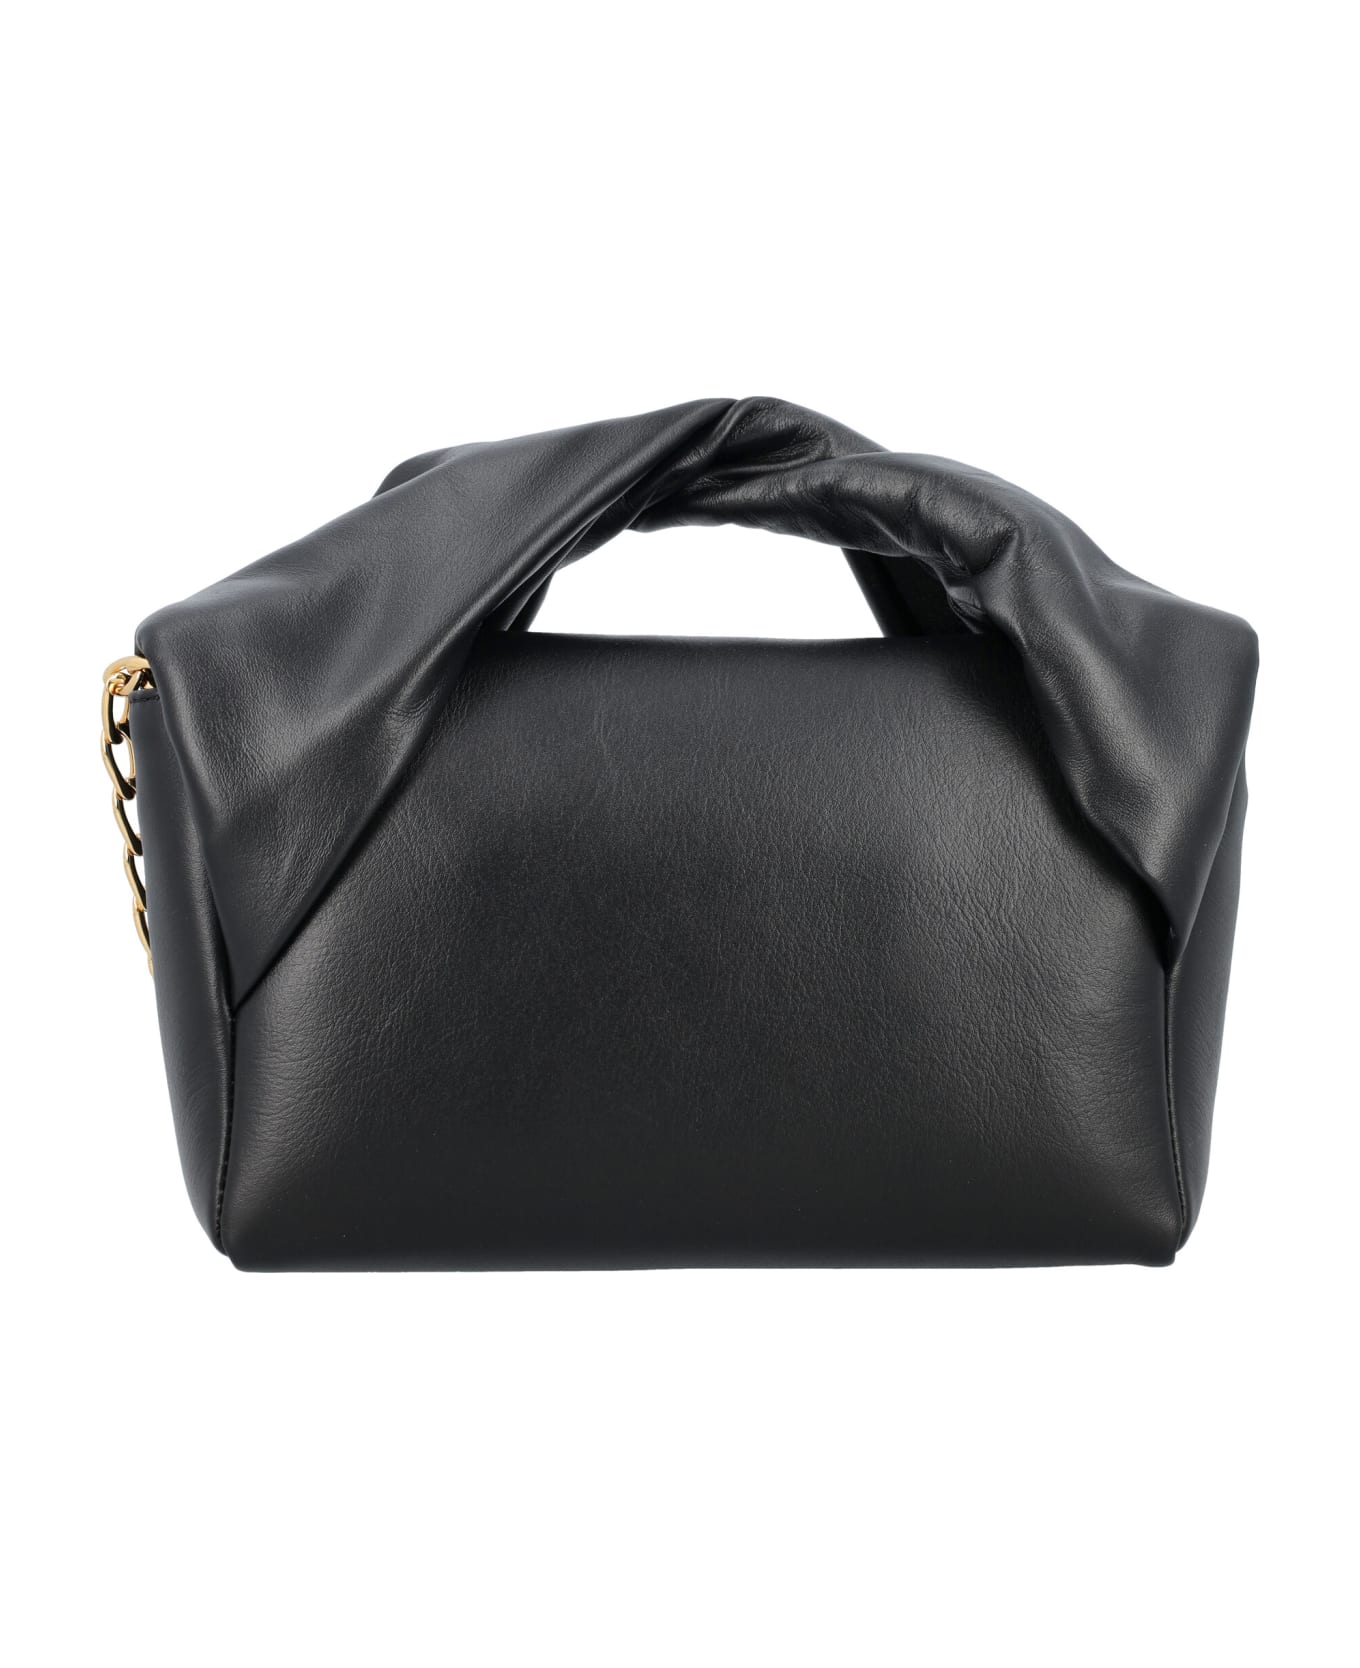 J.W. Anderson Black Leather Bag - BLACK